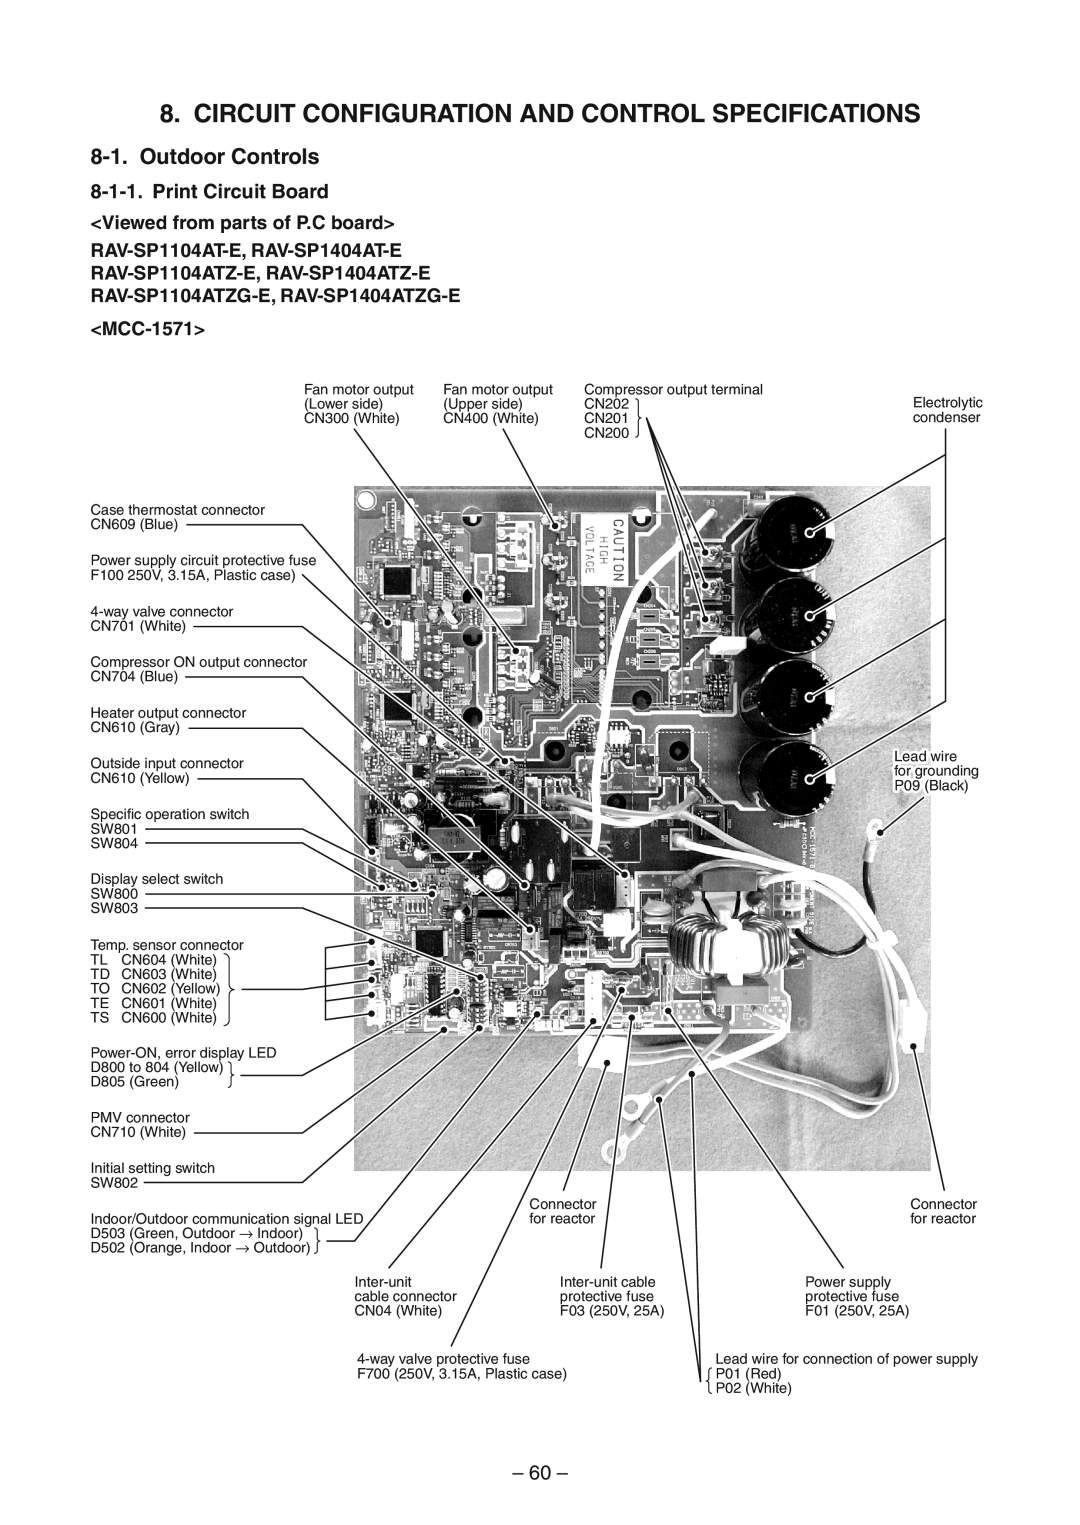 Toshiba RAV-SP1404ATZ-E, RAV-SM1404UT-E Outdoor Controls, Print Circuit Board, 60, Viewed from parts of P.C board 